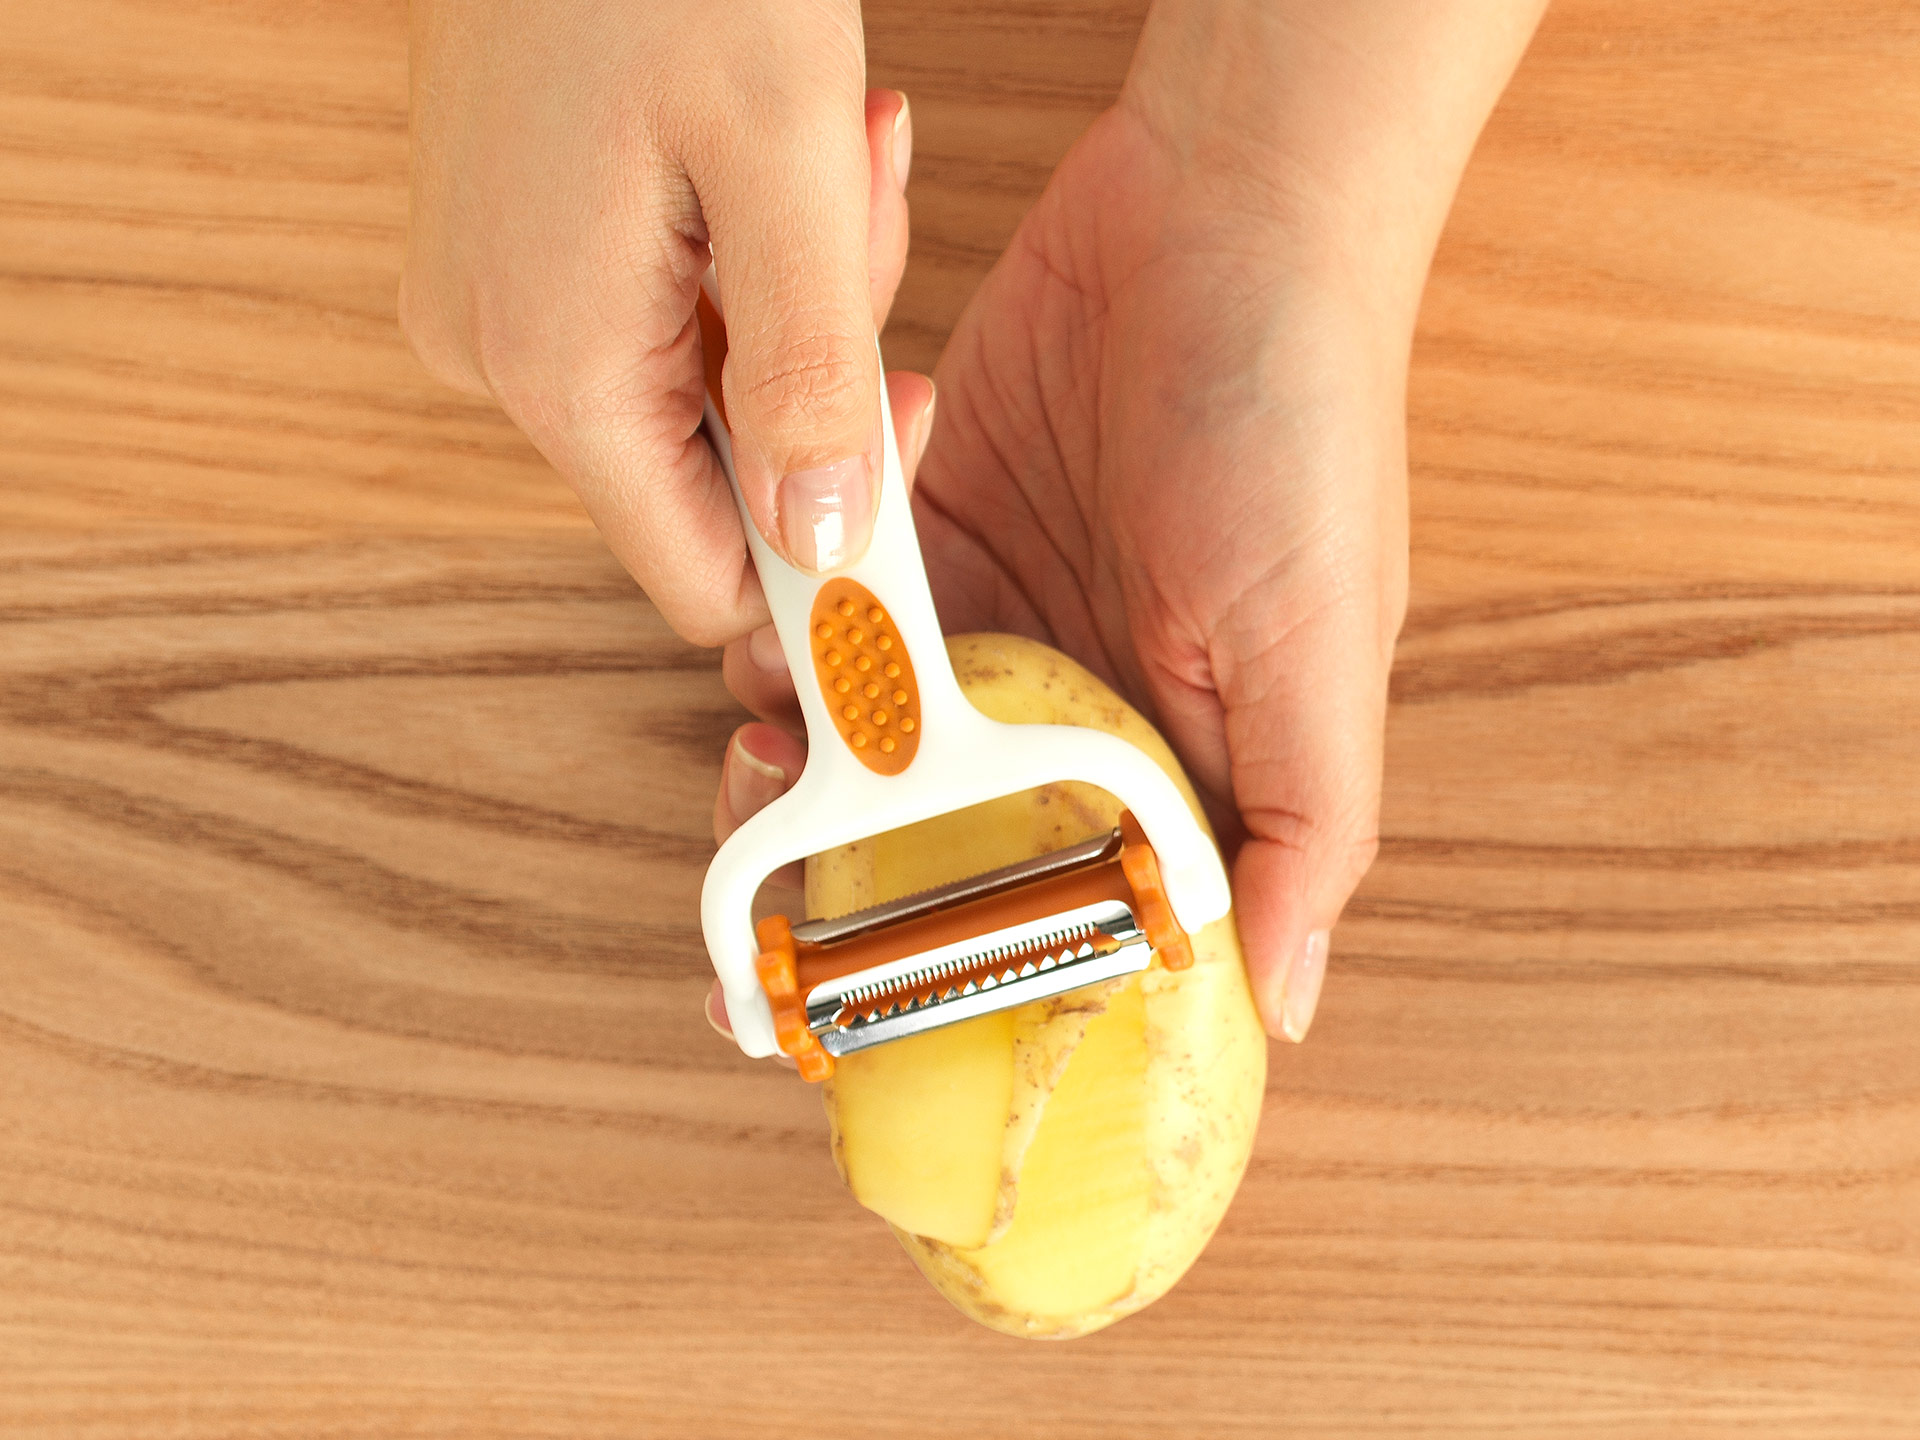 Фото ножа с картошкой